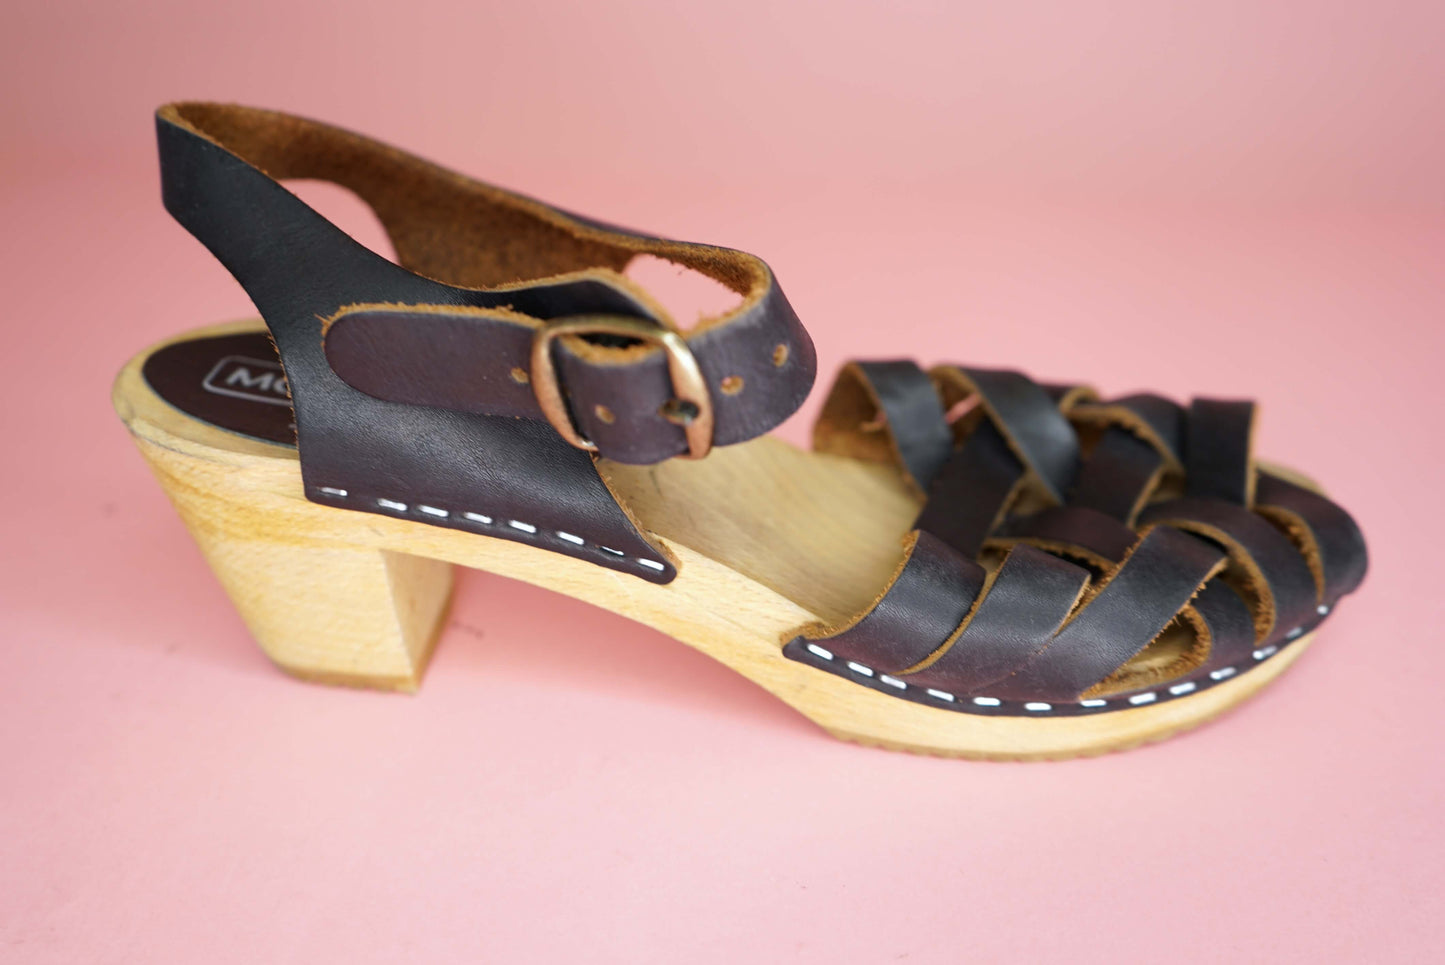 Swedish Clogs Wooden Sandals Low Heel Black Oiled Leather Mary Jane Clogs Peep Toe Moheda Clogs Handmade UK Size 4.5-5/ EU 37.5-38